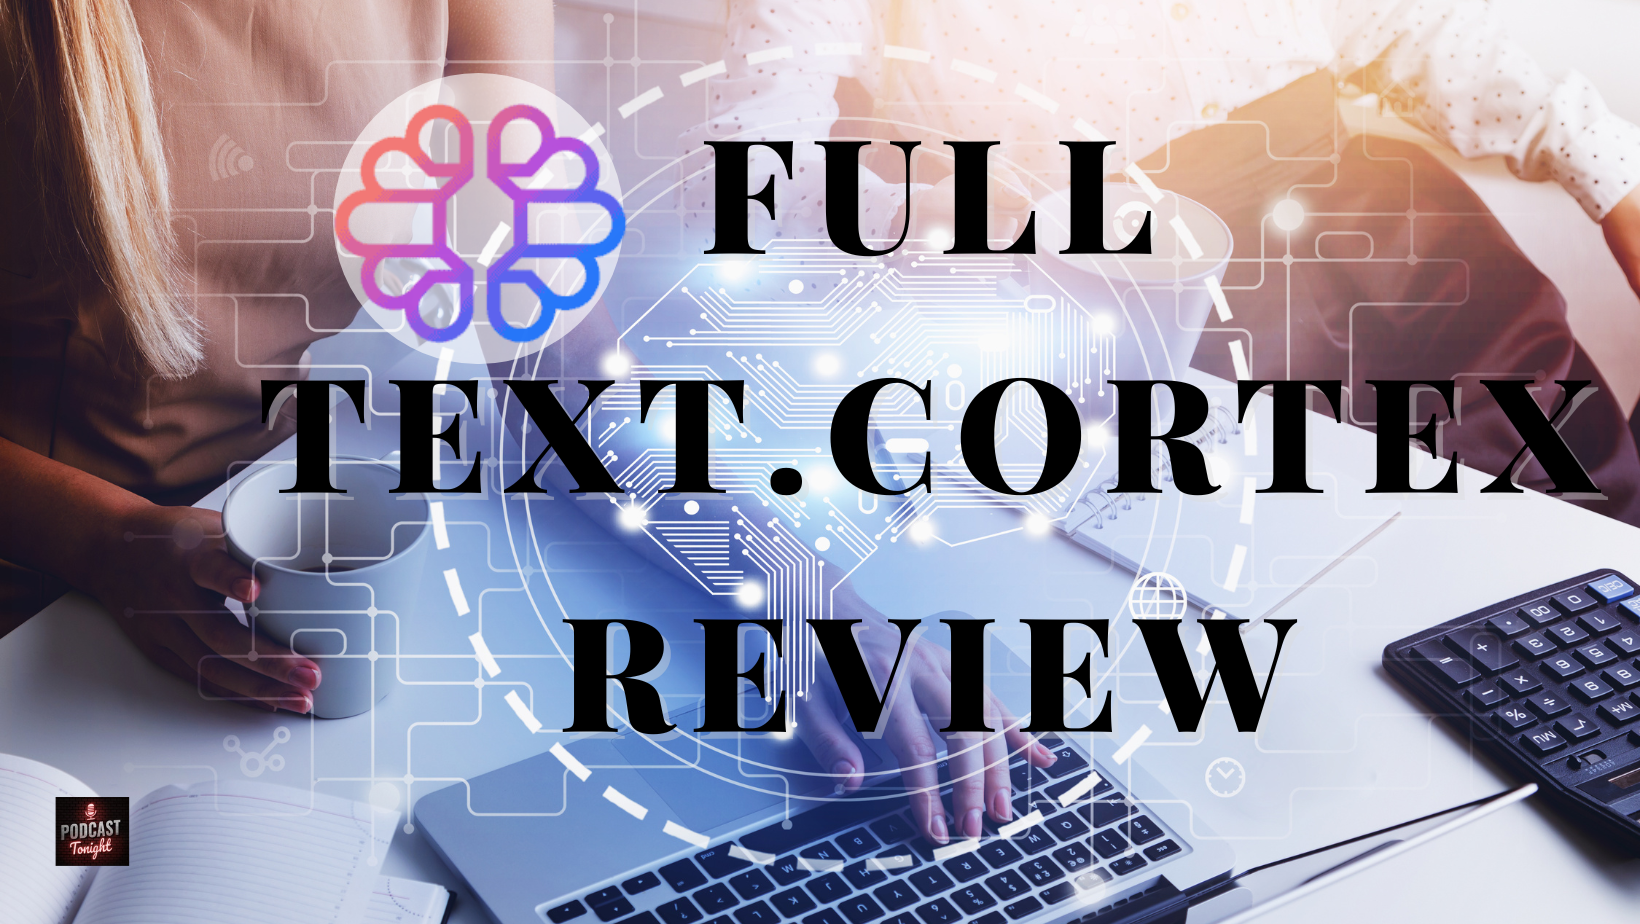 Full TextCortex Review